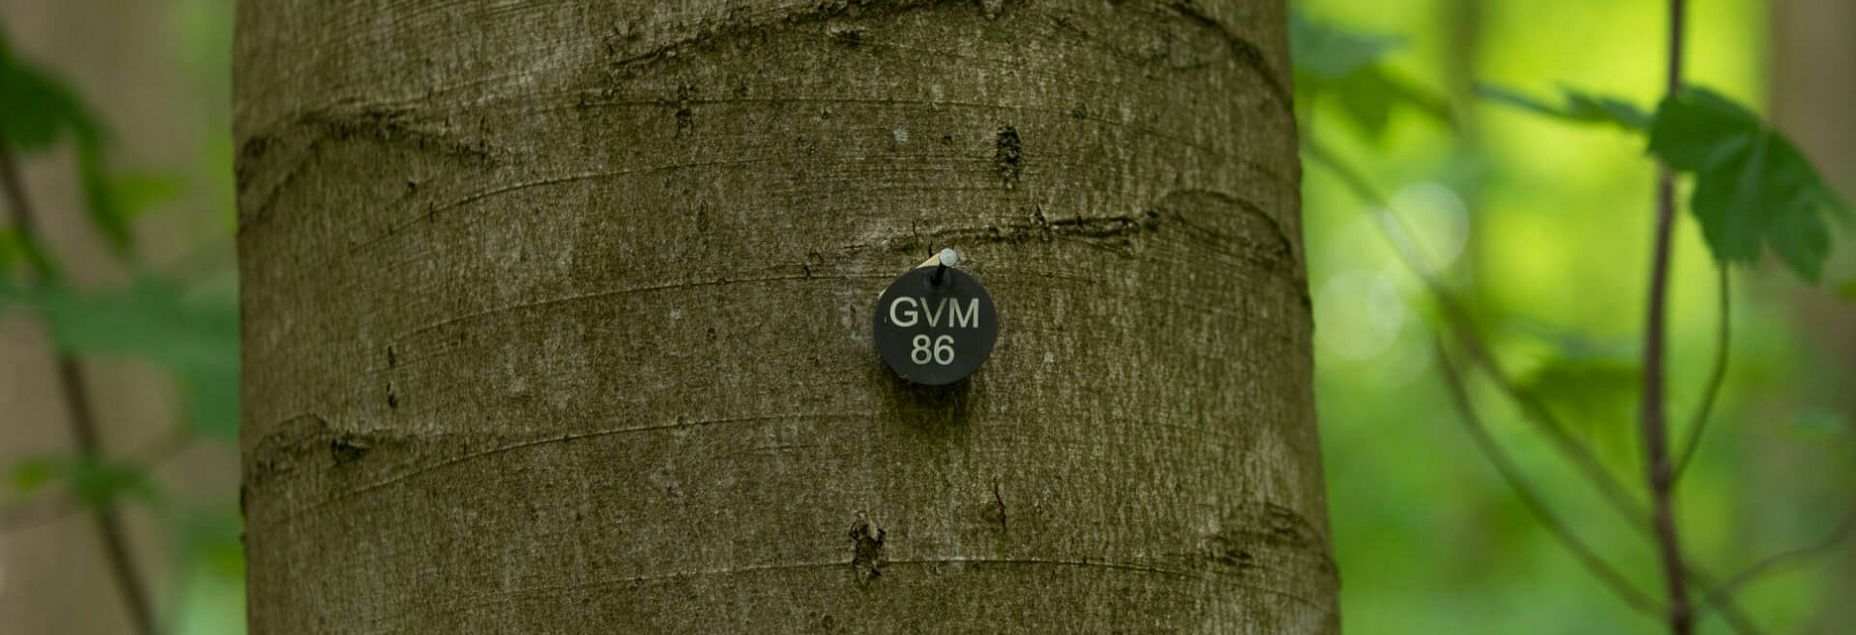 Baum GVM 86 - Plakette